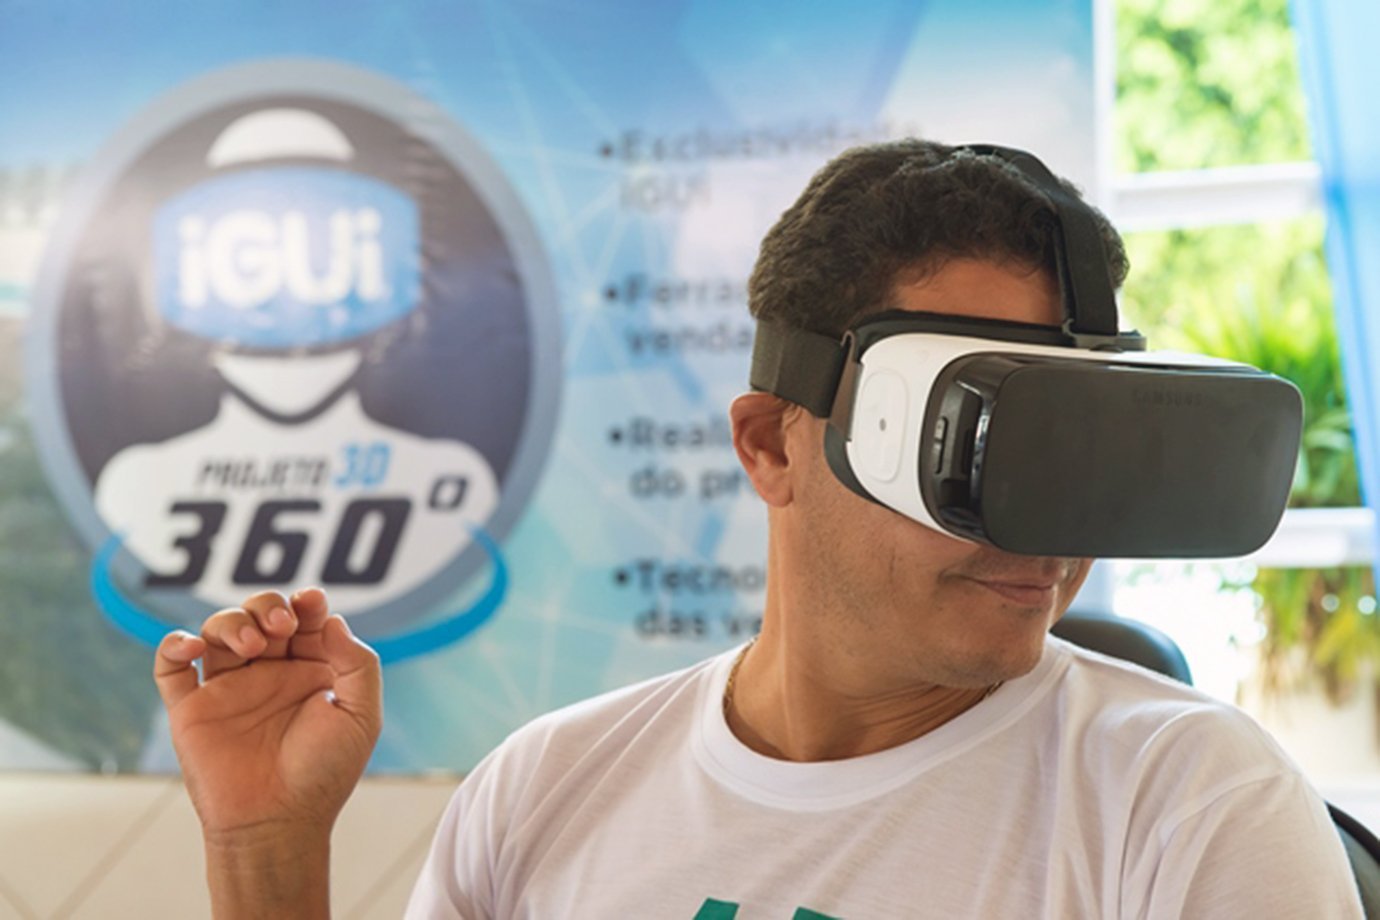 Consumidor experimenta óculos de realidade virtual da rede iGUi